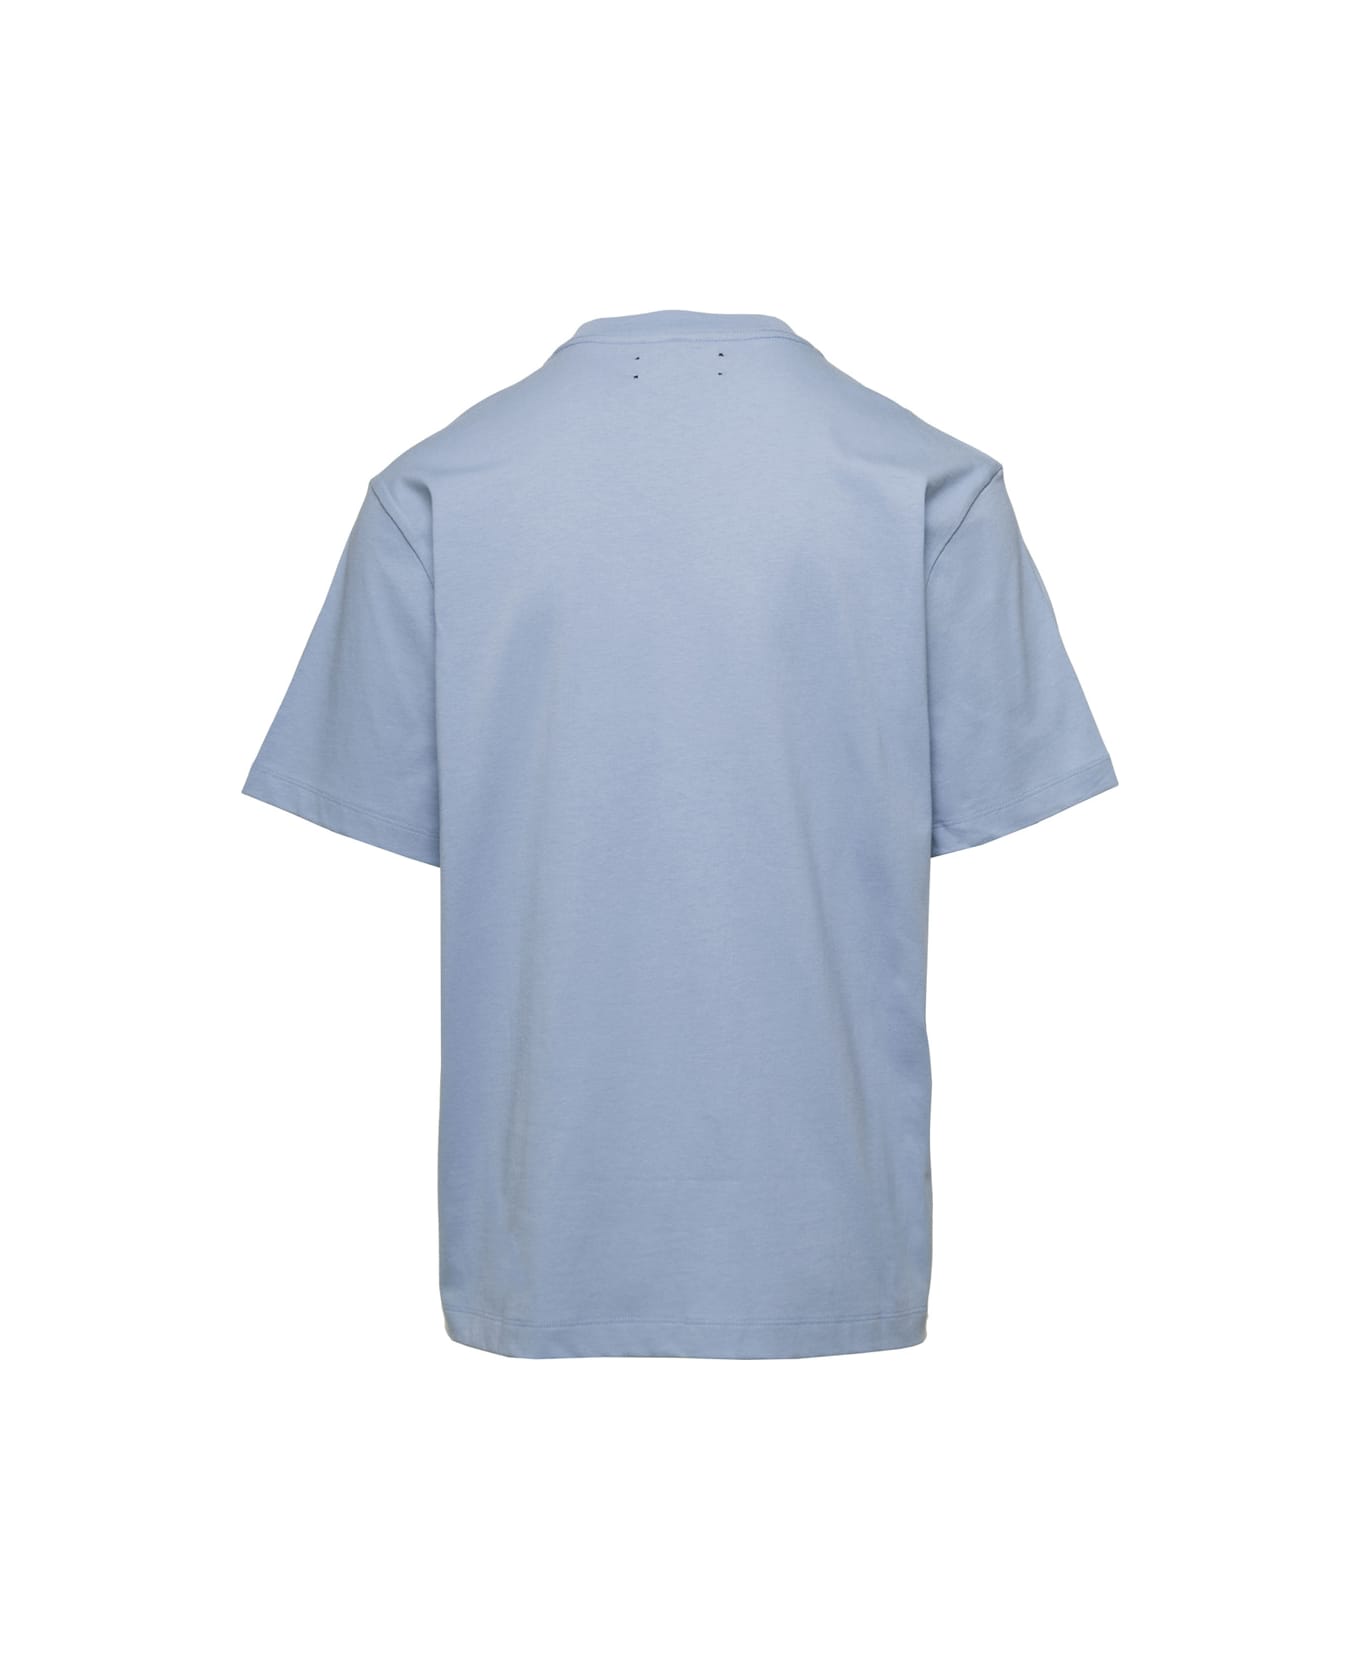 AMIRI Light Blue Crew Neck T-shirt In Cotton Man - Light blue